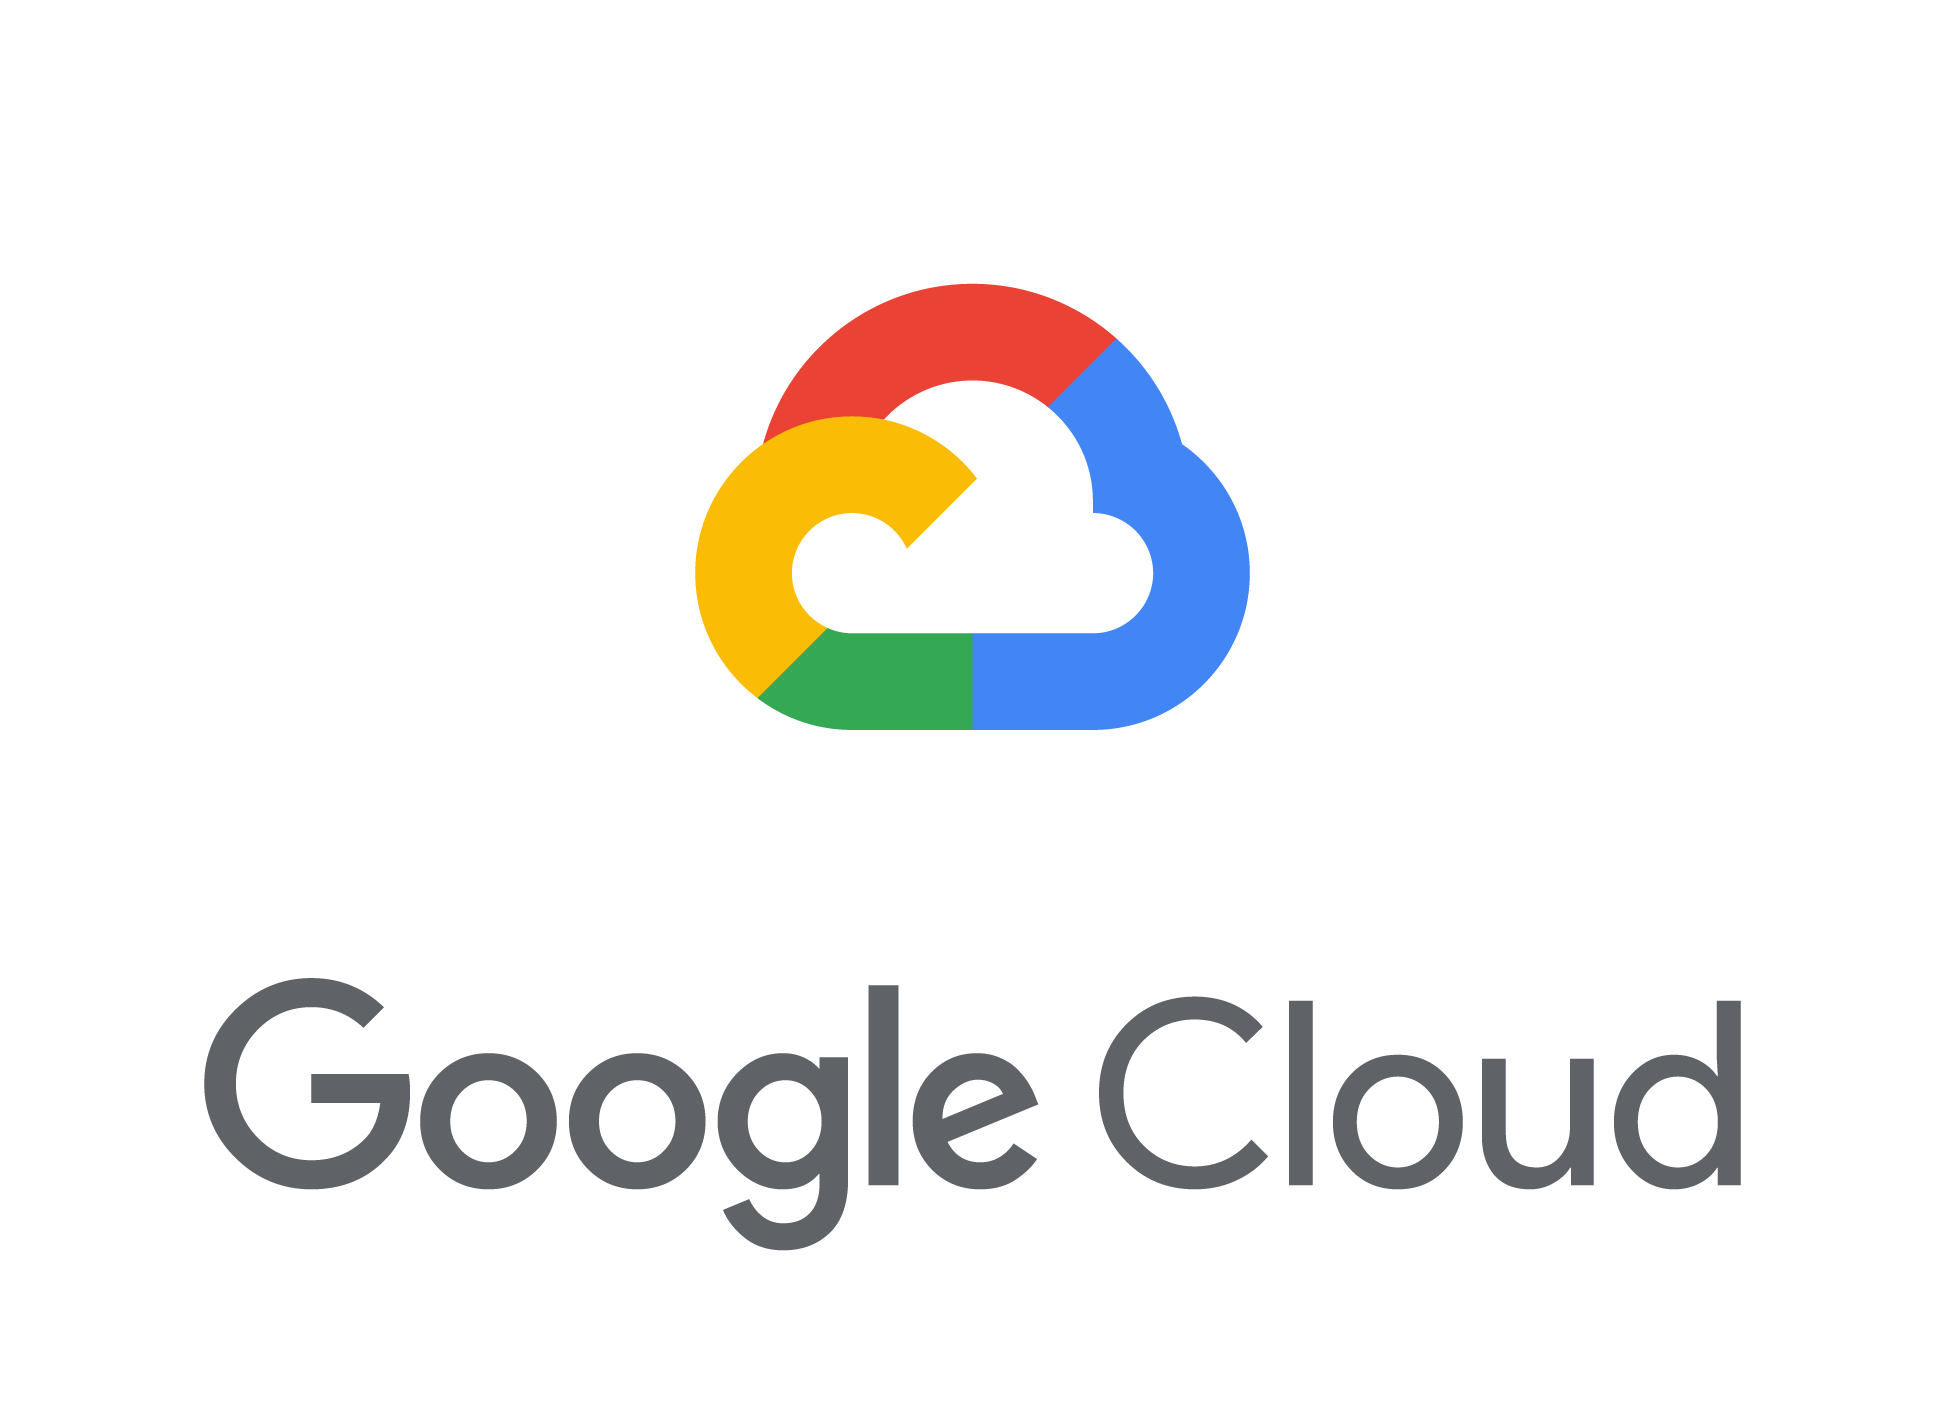 Google Cloud Platform Partner